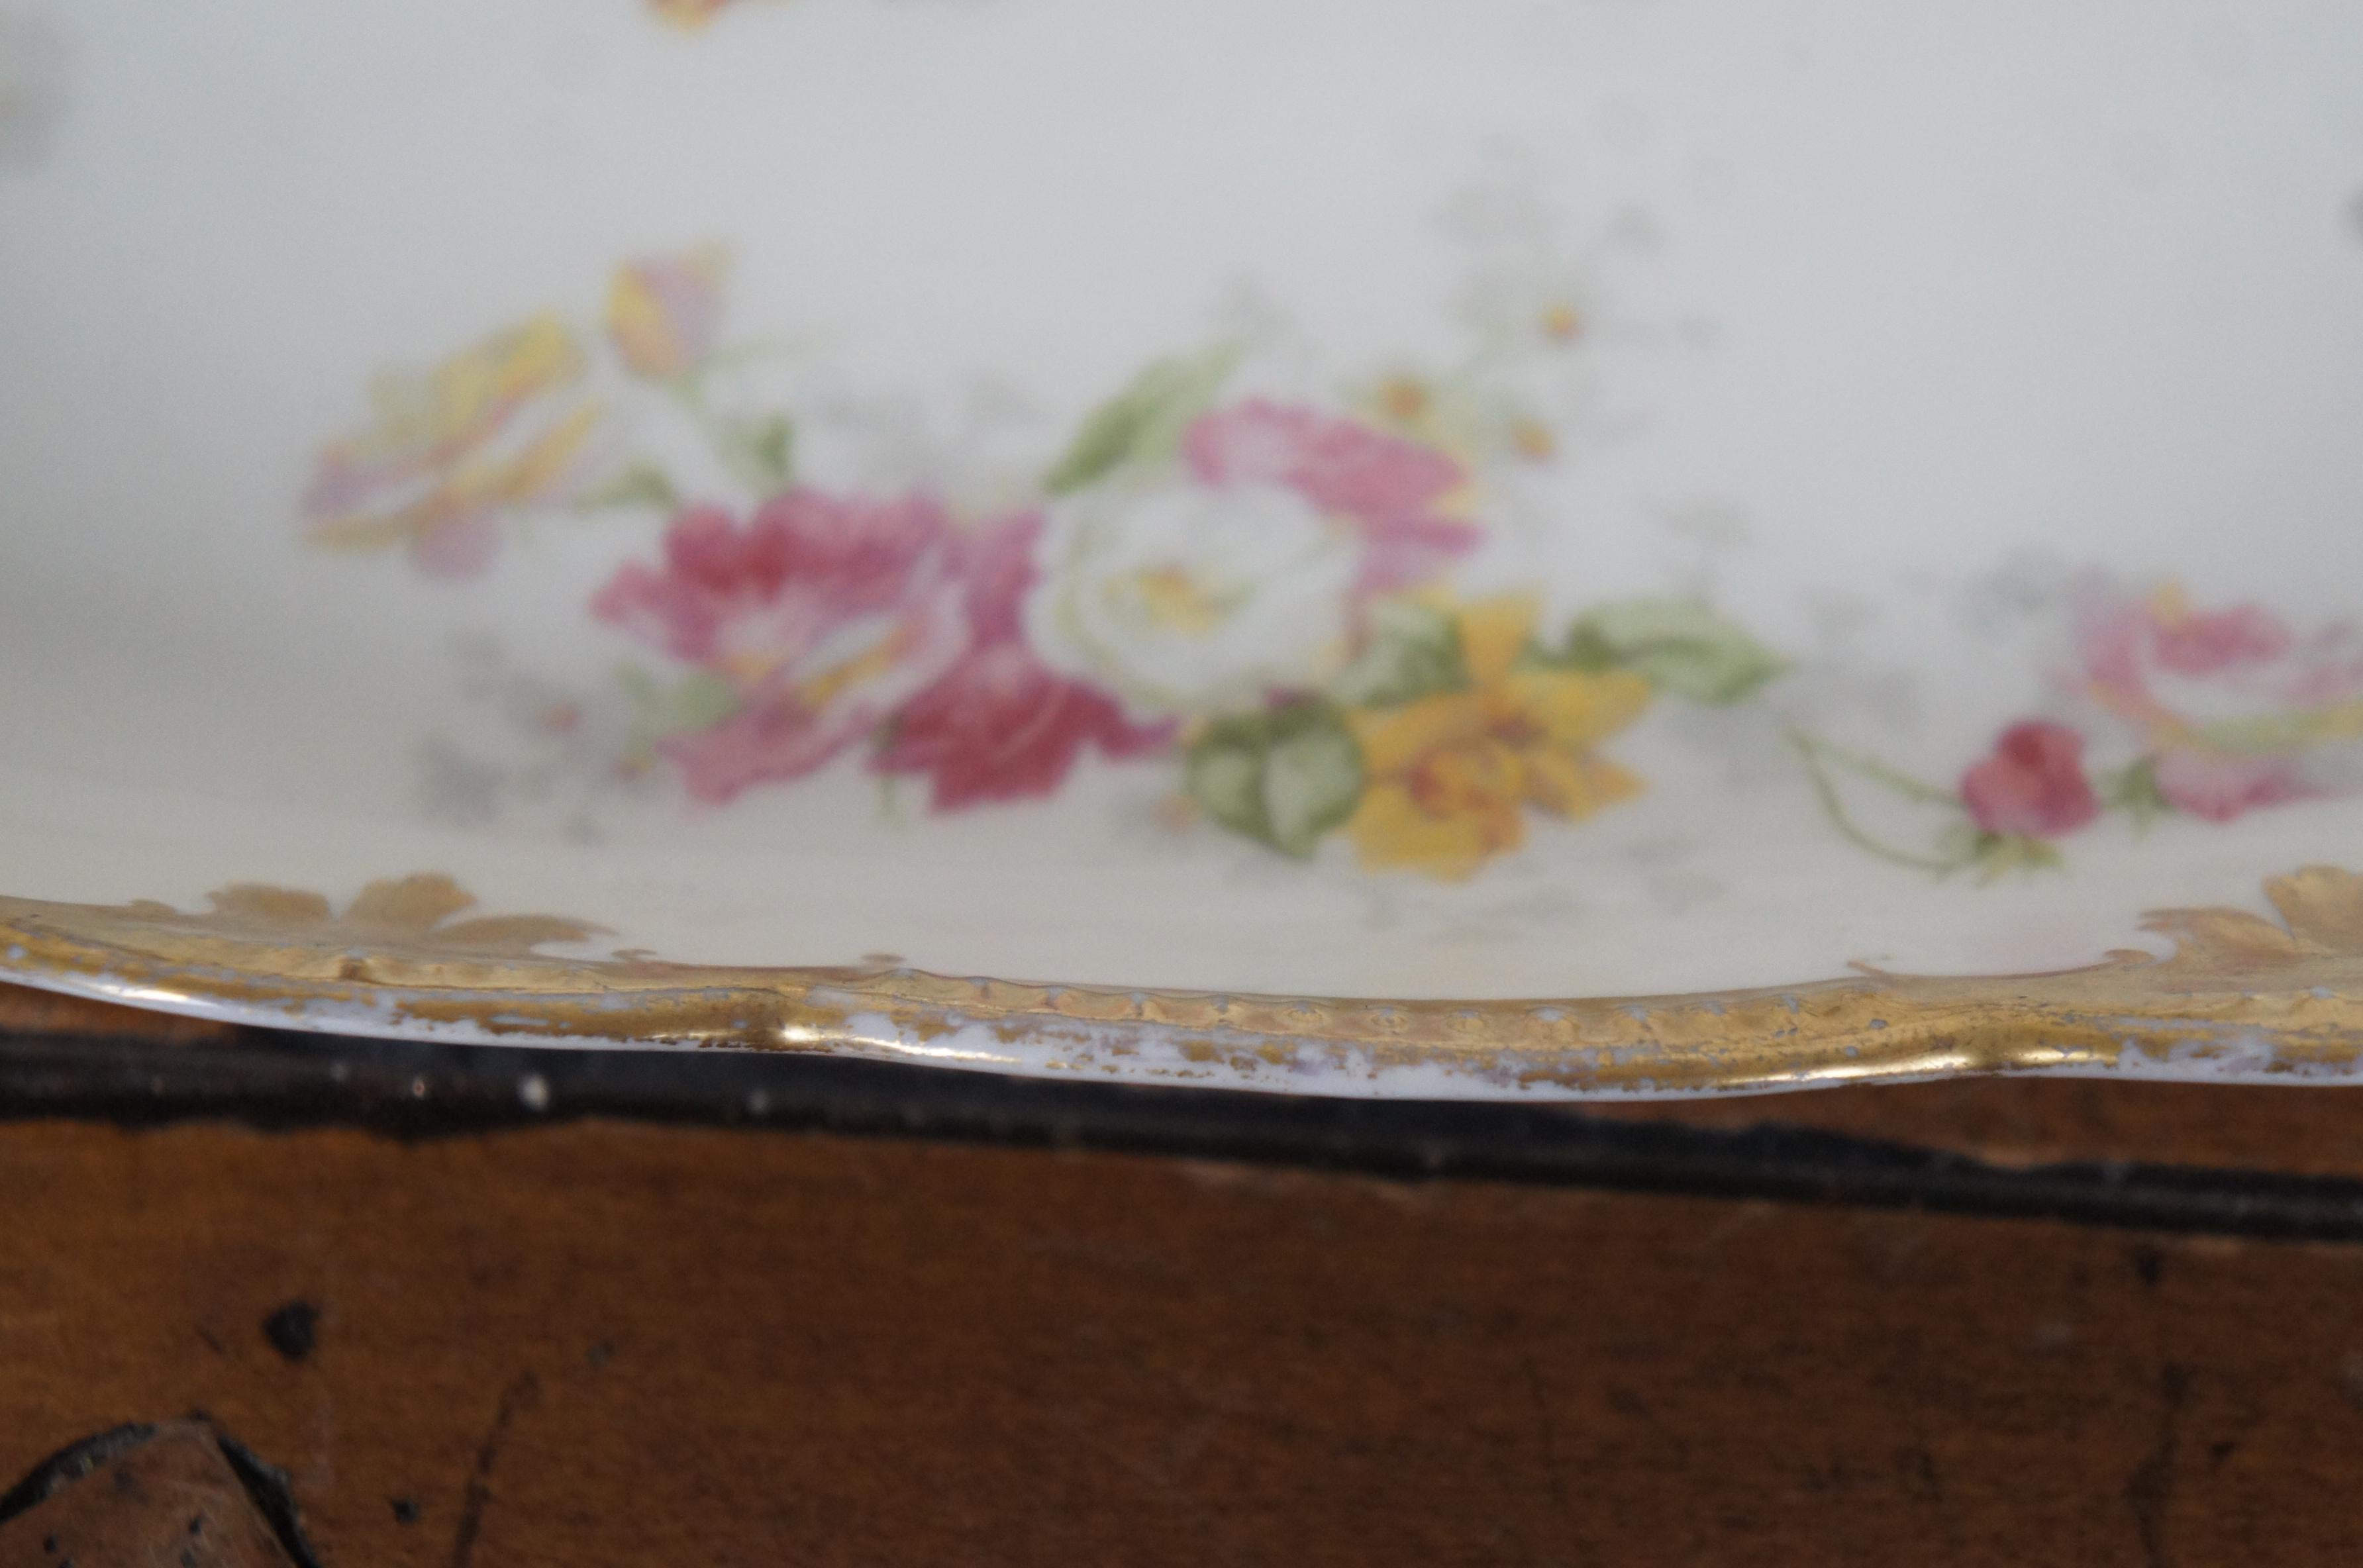 Antique Limoges France Floral Scalloped Oval Porcelain Dish Vanity Tray 13